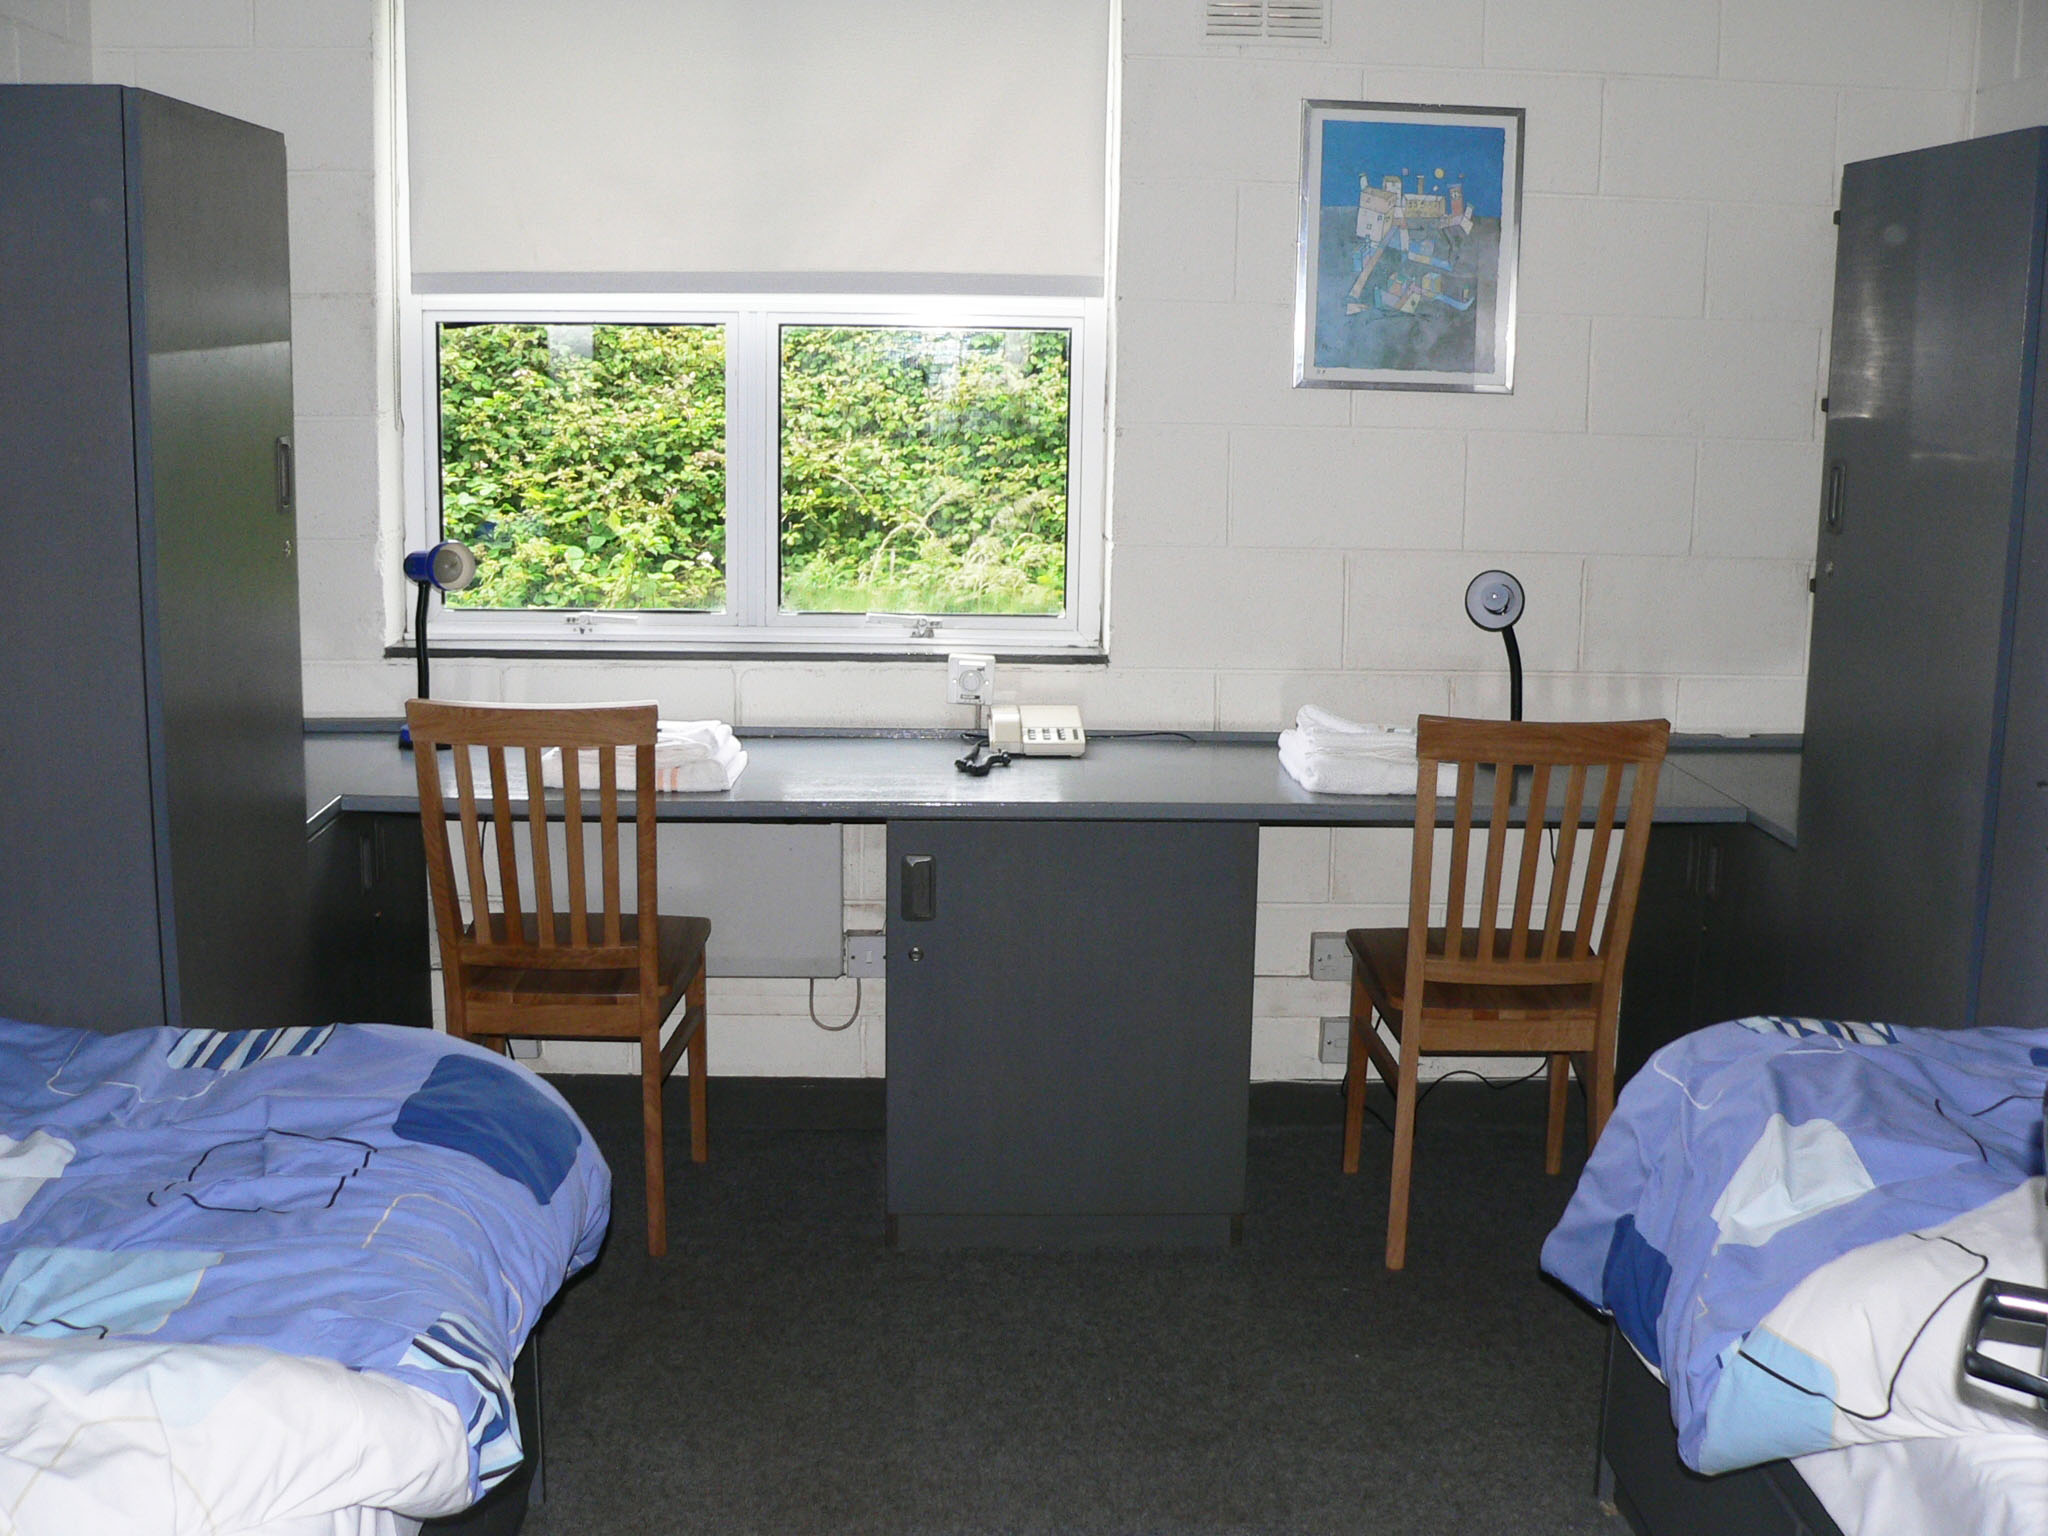 Bedroom in residence hall in Cork, Ireland.